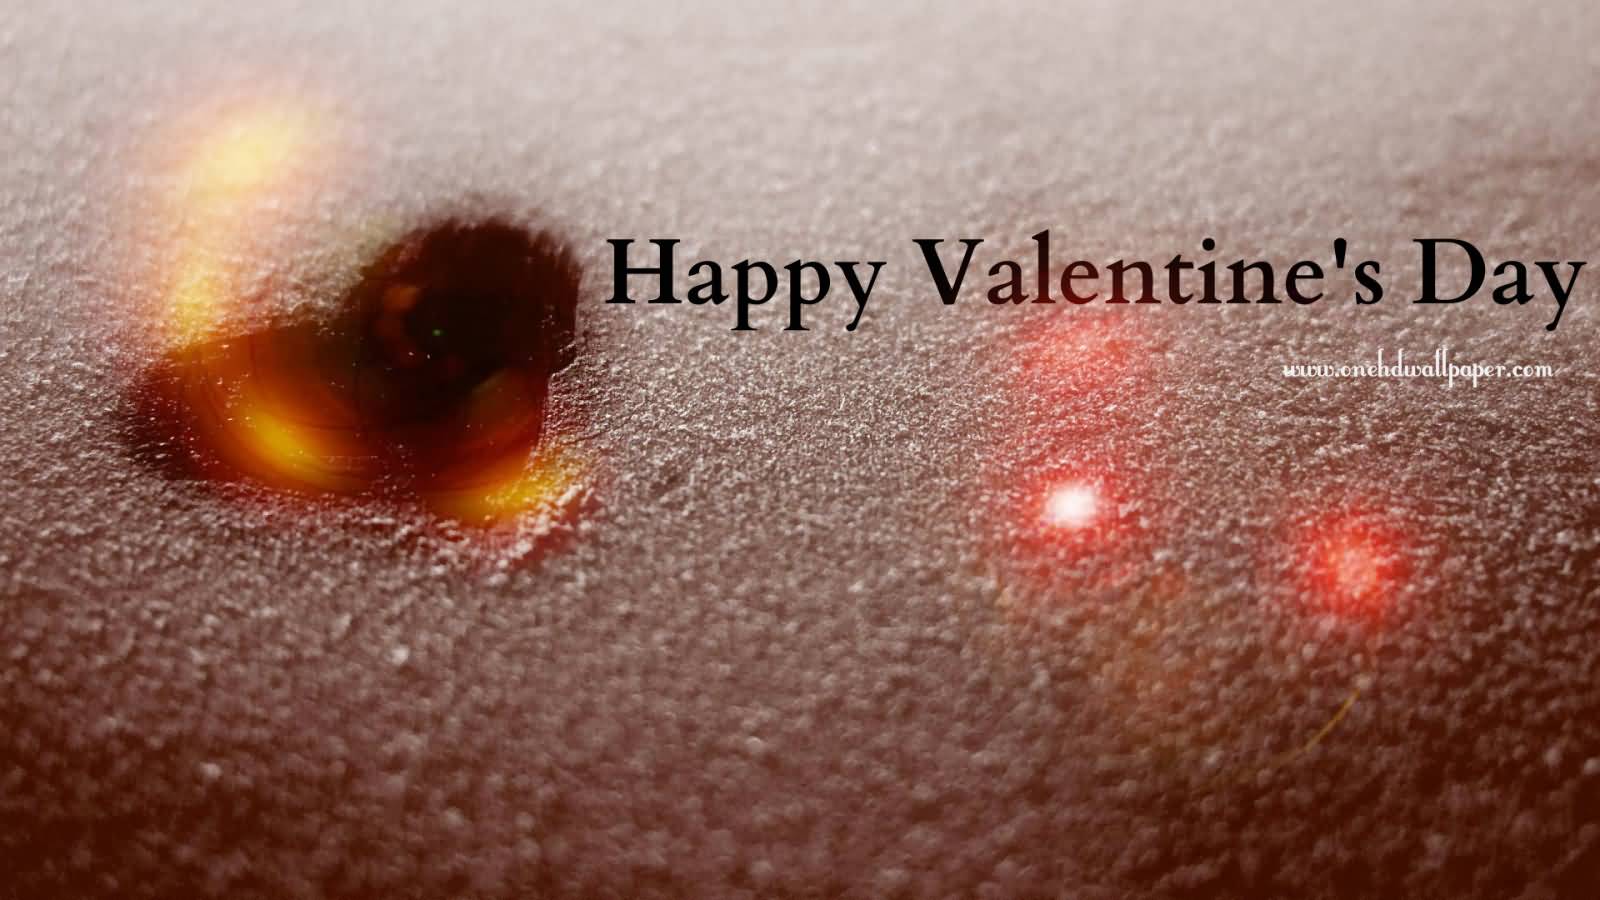 Happy Valentine’s Day HD Wallpaper